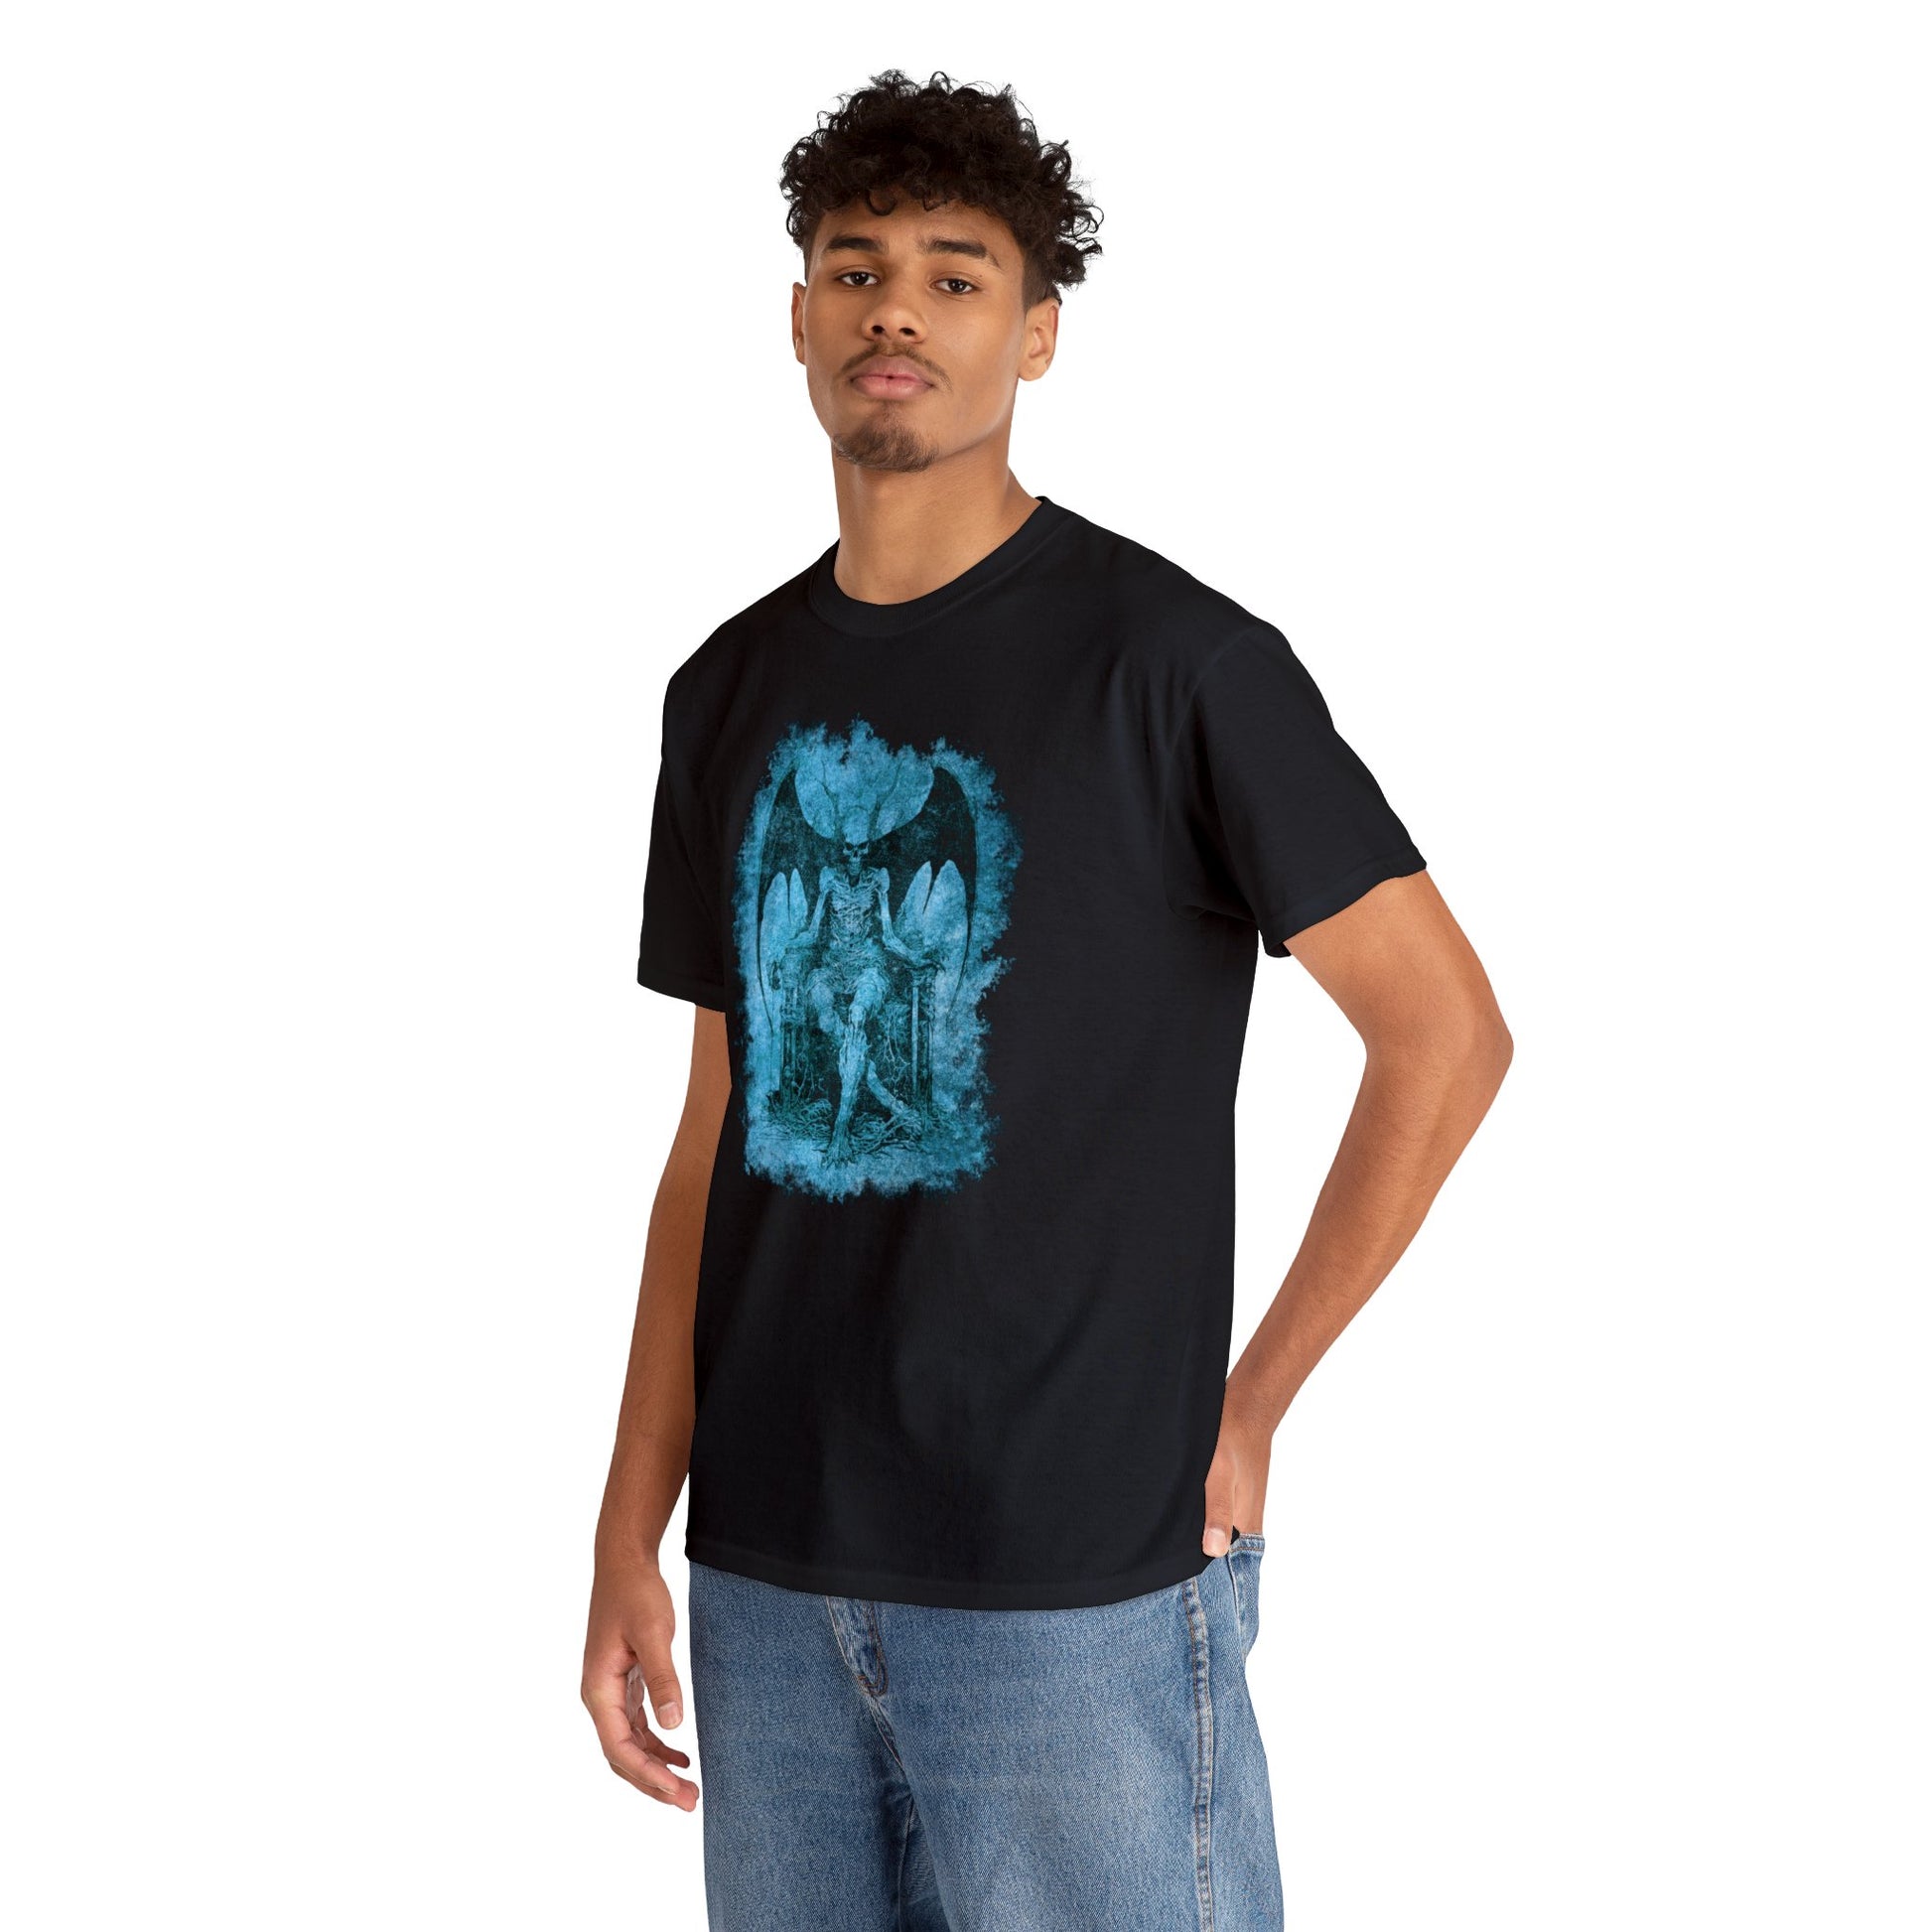 Unisex T-shirt Devil on his Throne in Blue - Frogos Design